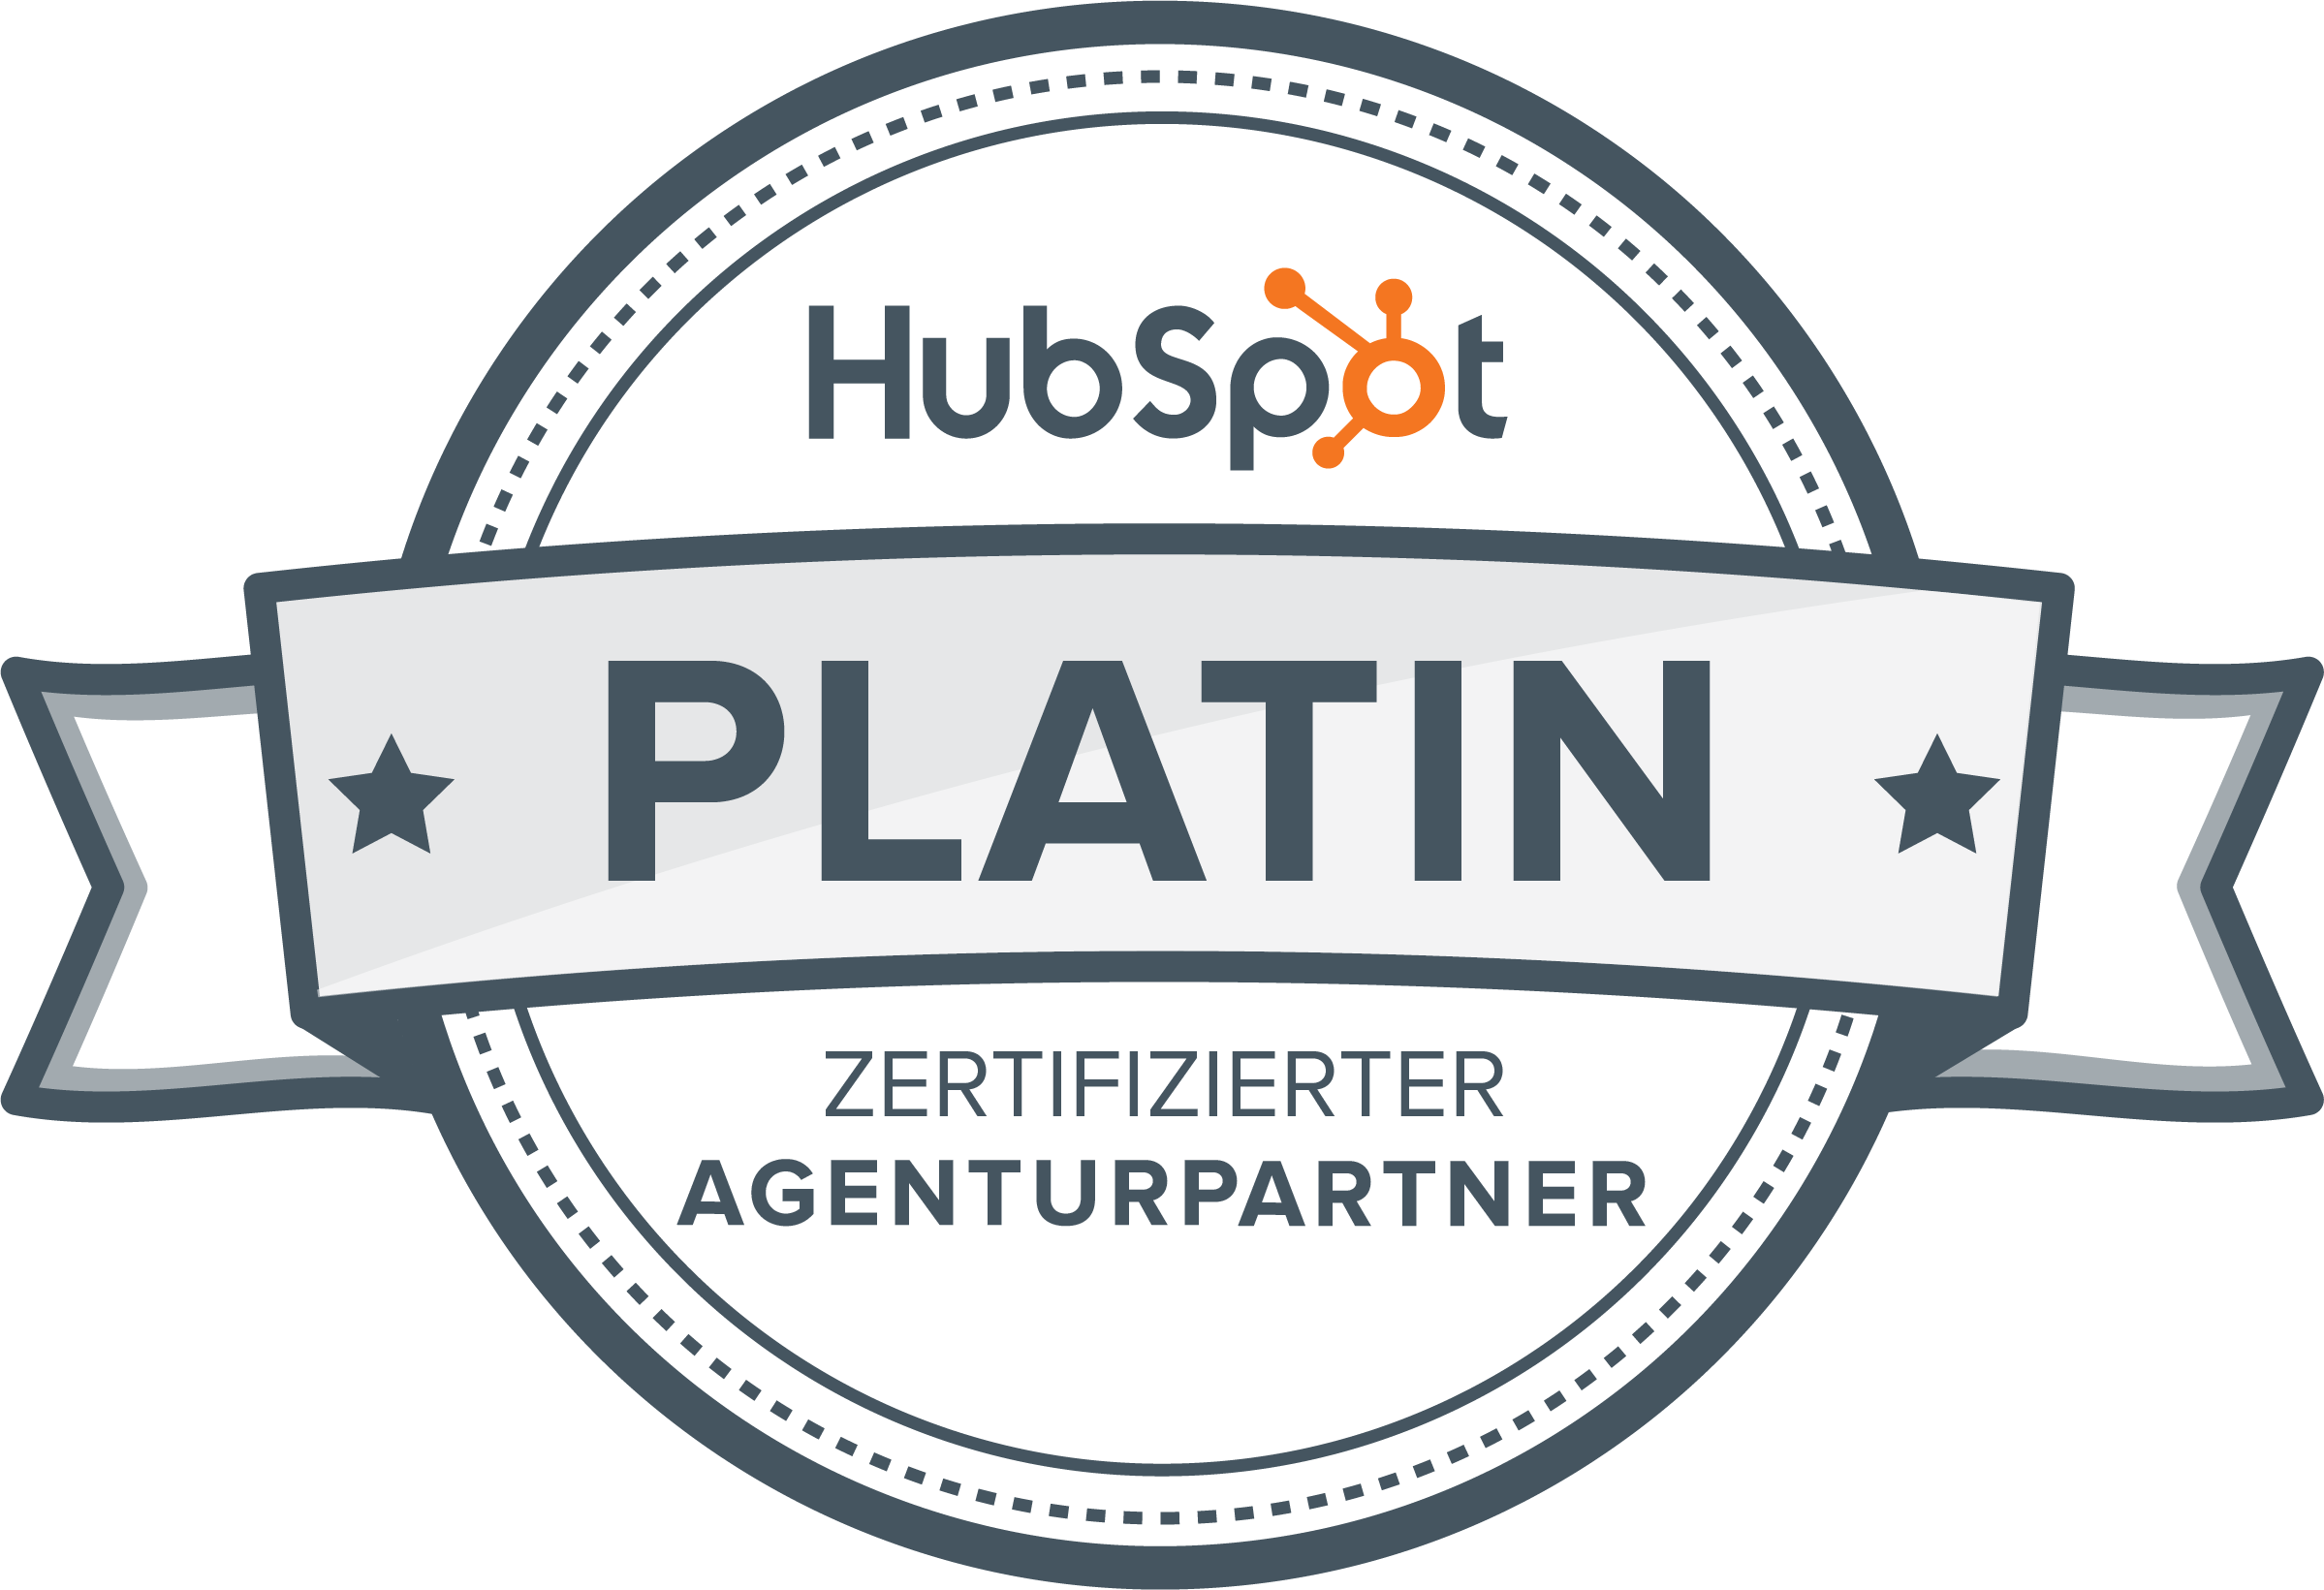 Thorit ist HubSpot Platinum Partner. 